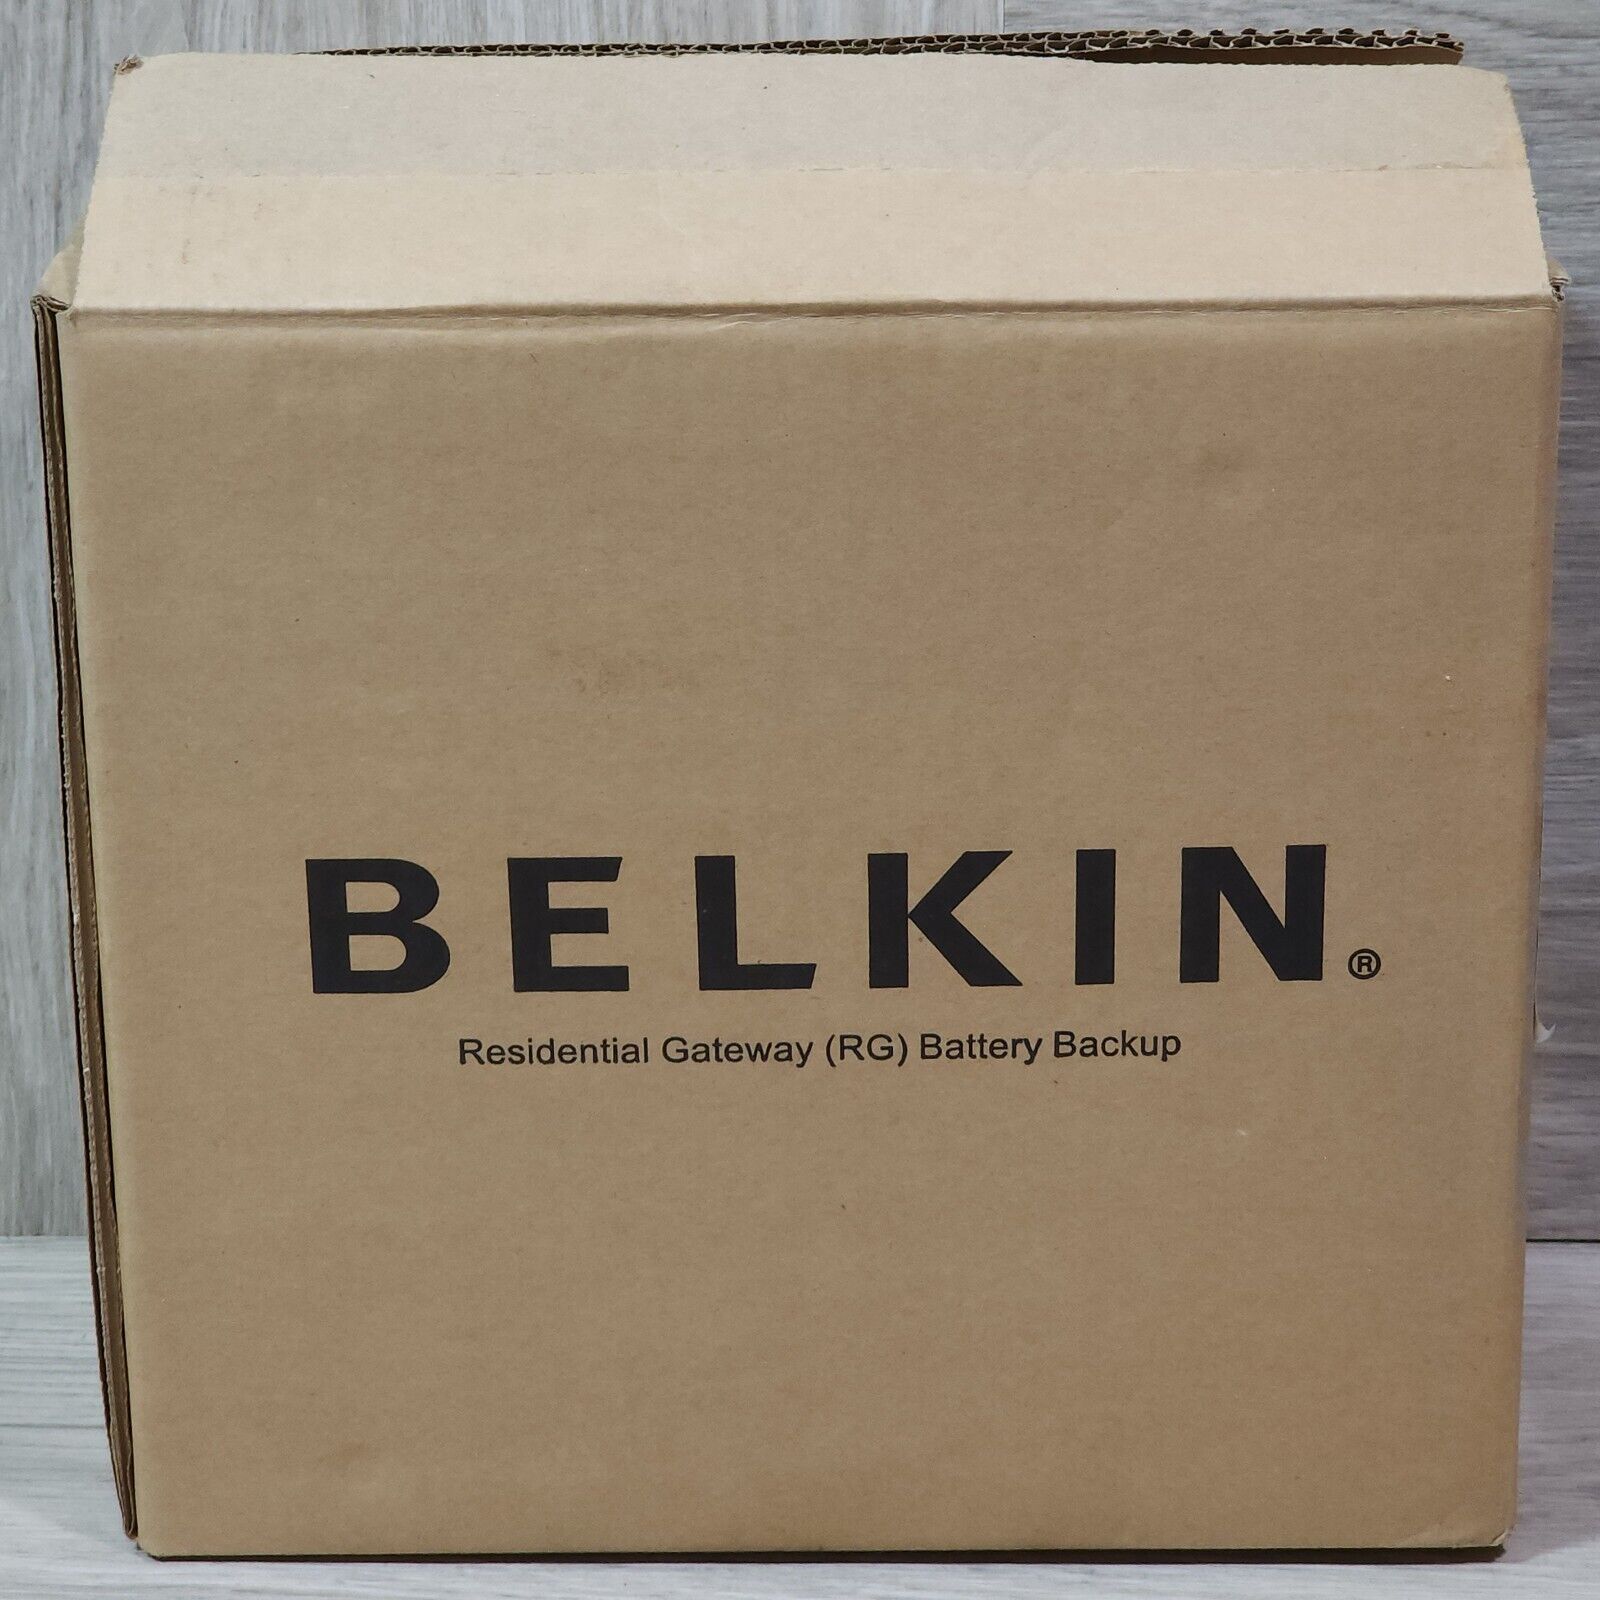 Belkin BU3DC001-12V Residential Gateway Battery Backup REV B